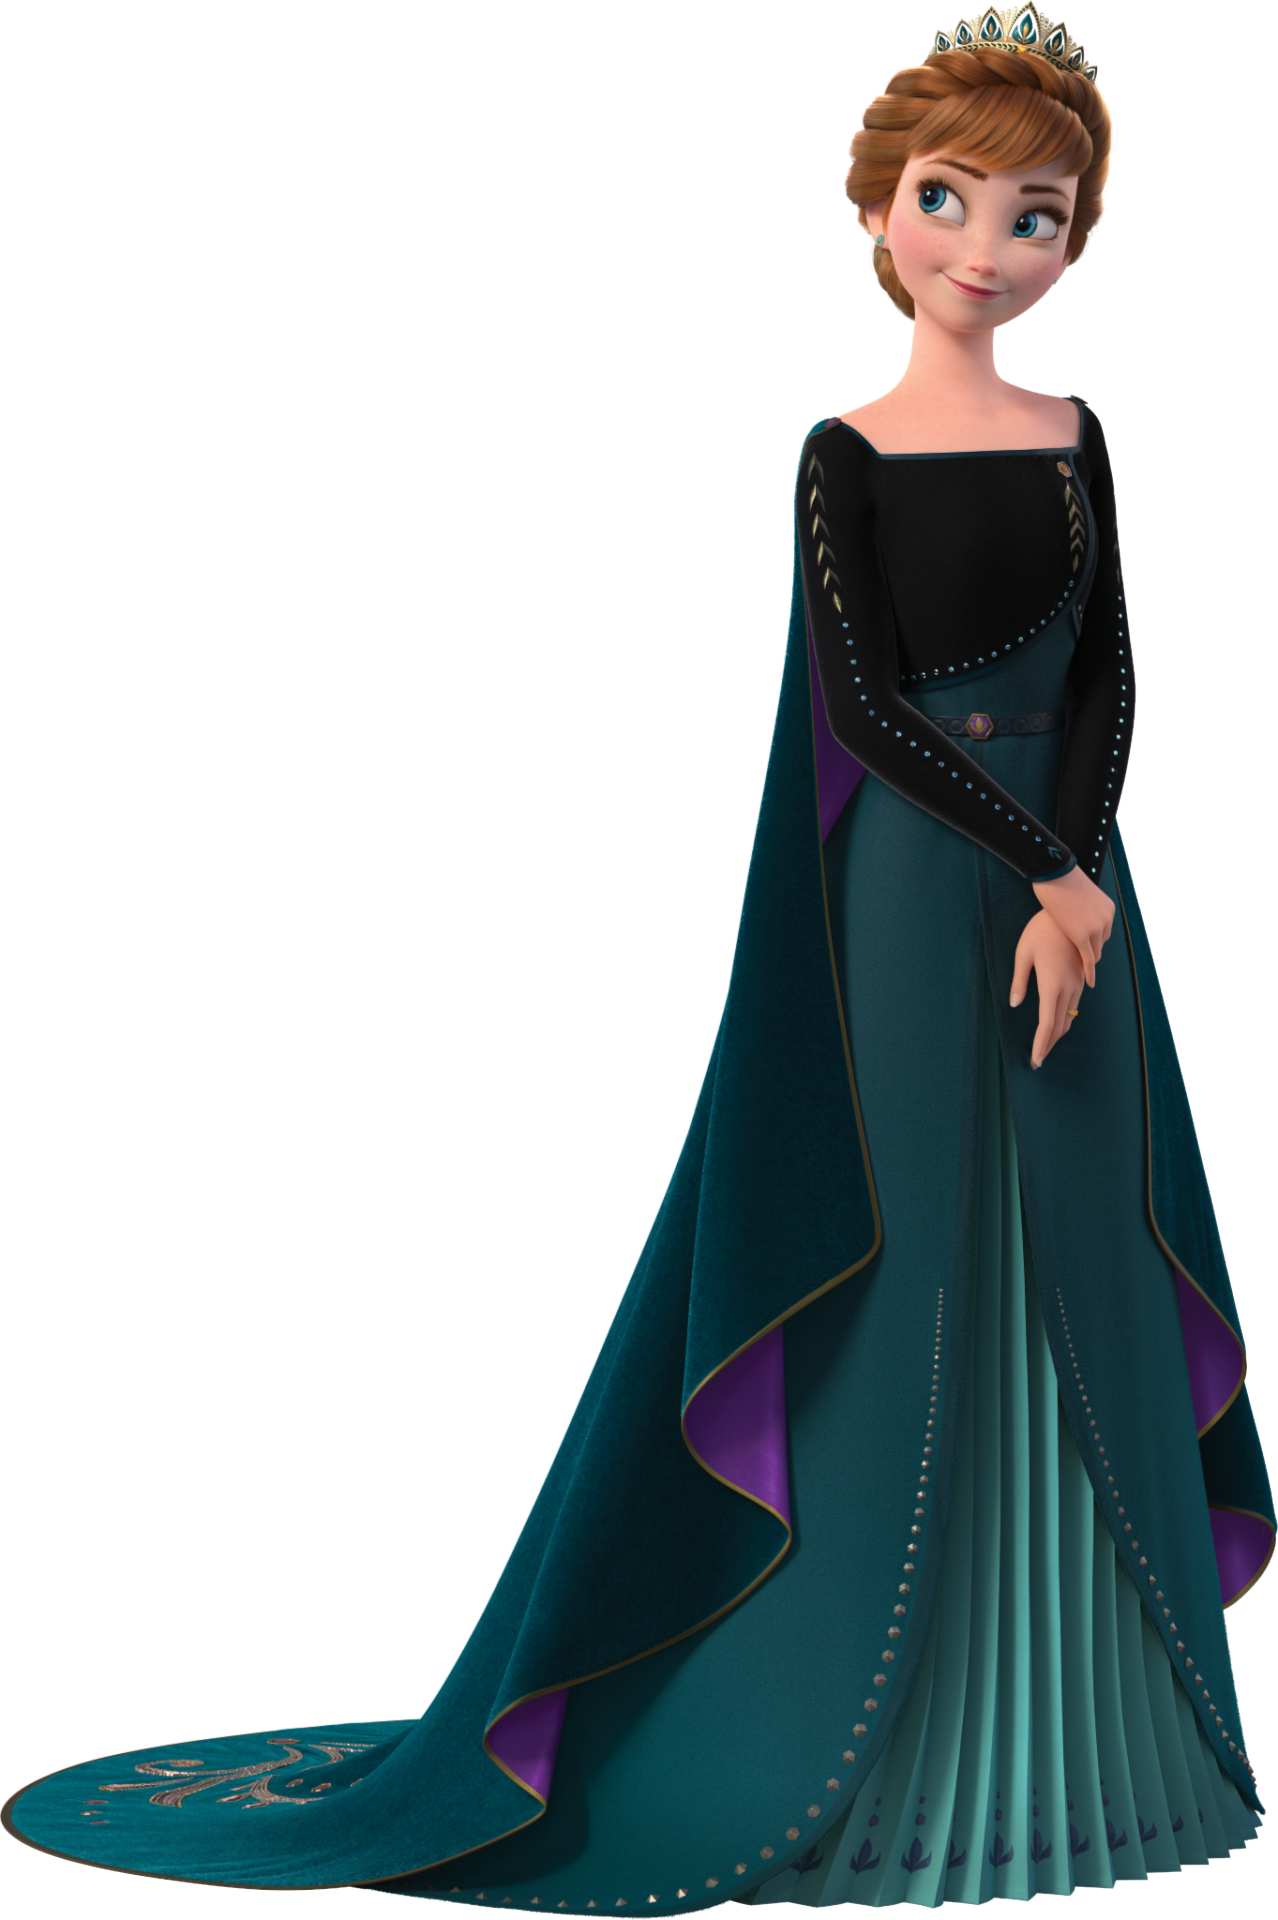 La Reine des Neiges II [Walt Disney - 2019] - Page 16 8d6ec07bf775dae951df3680116612dffdf73fbb